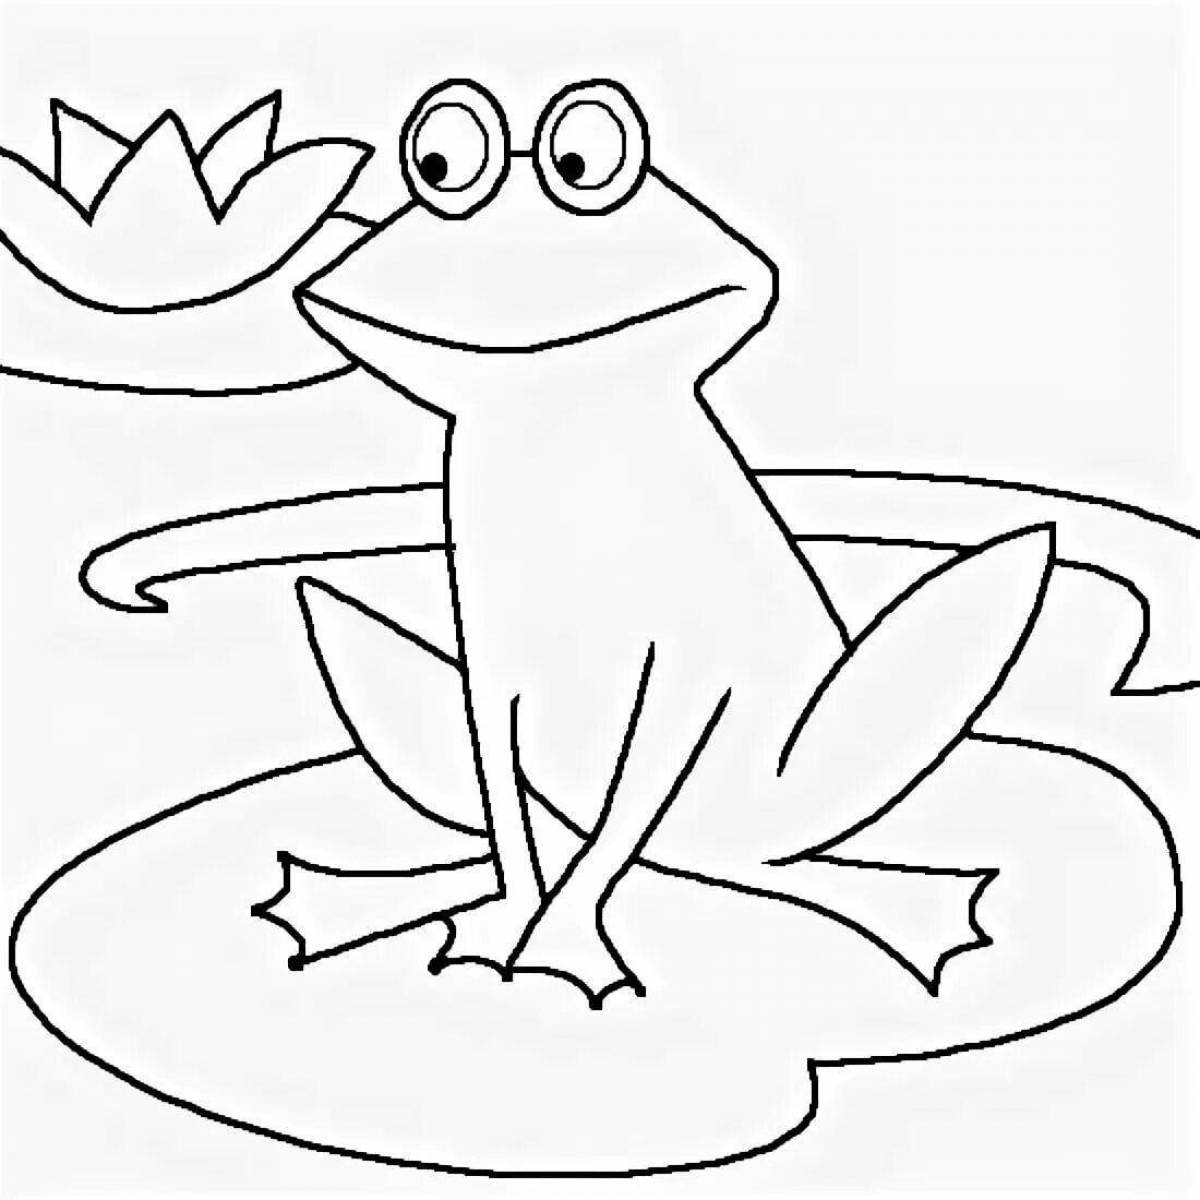 Cute traveler frog coloring book for kids